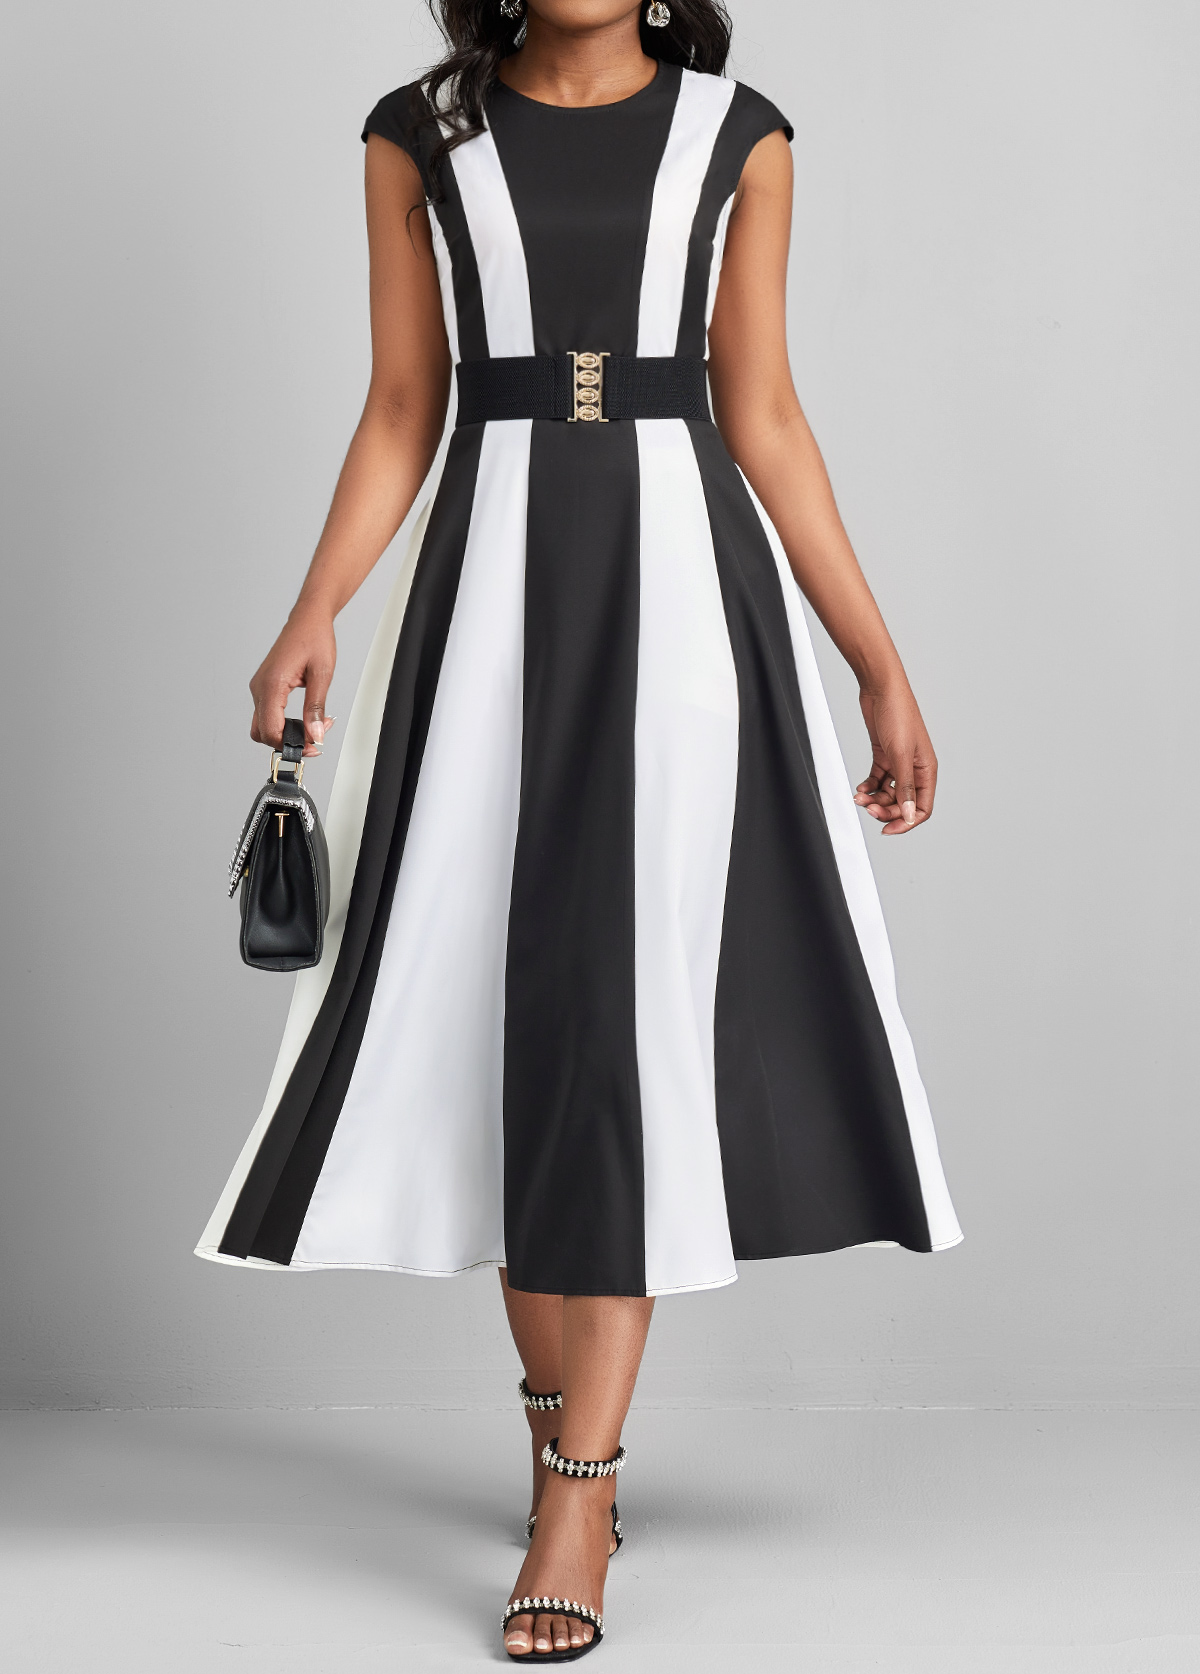 Round Neck Zipper Black Short Sleeve Dress | Rosewe.com - USD $36.98